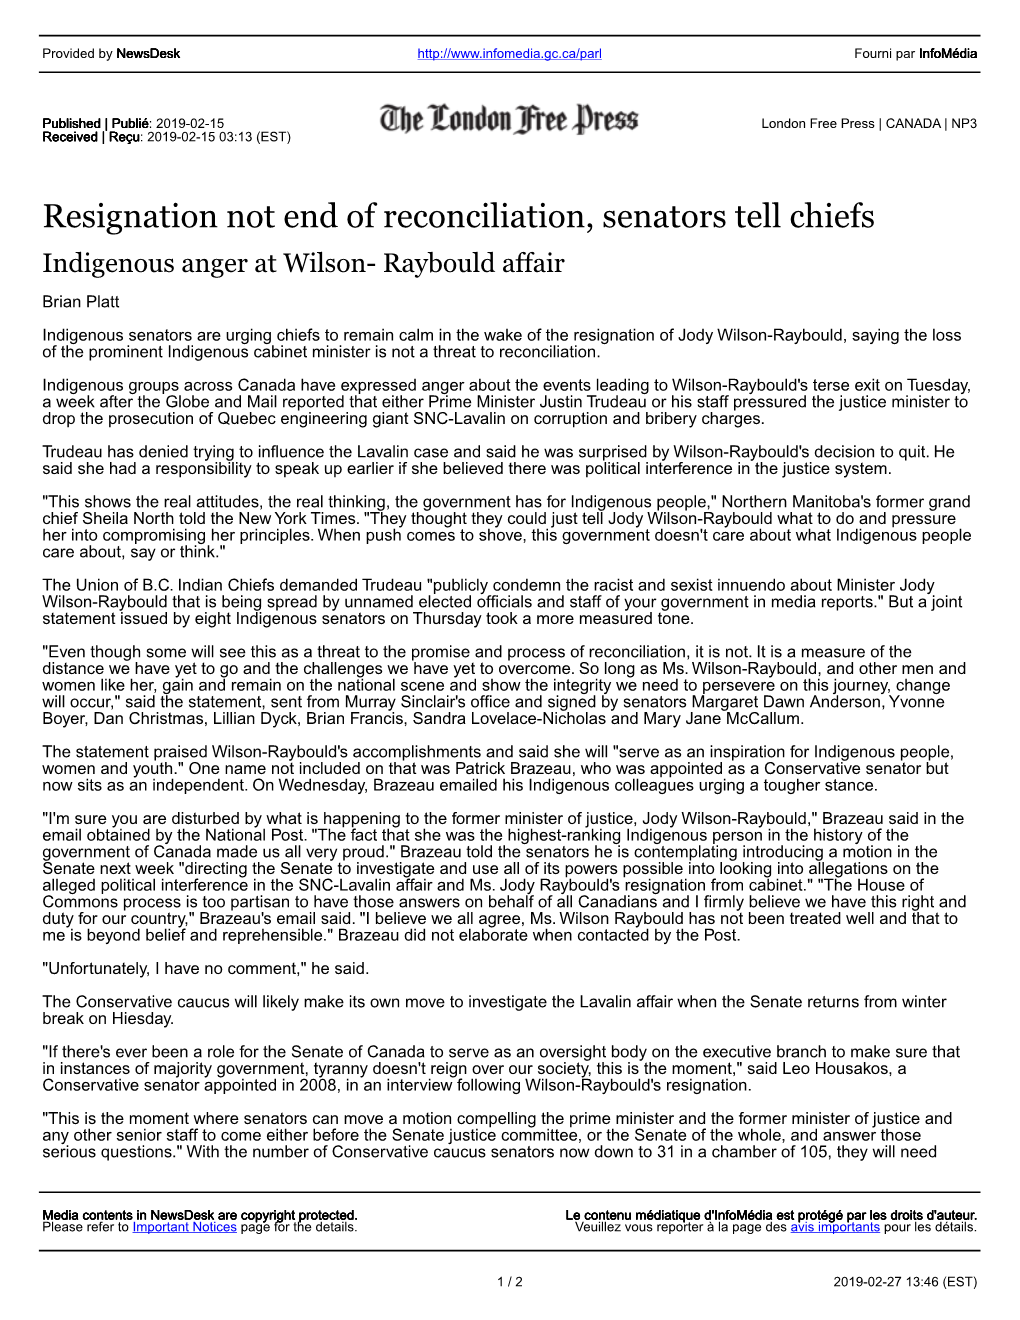 Resignation Not End of Reconciliation, Senators Tell Chiefs